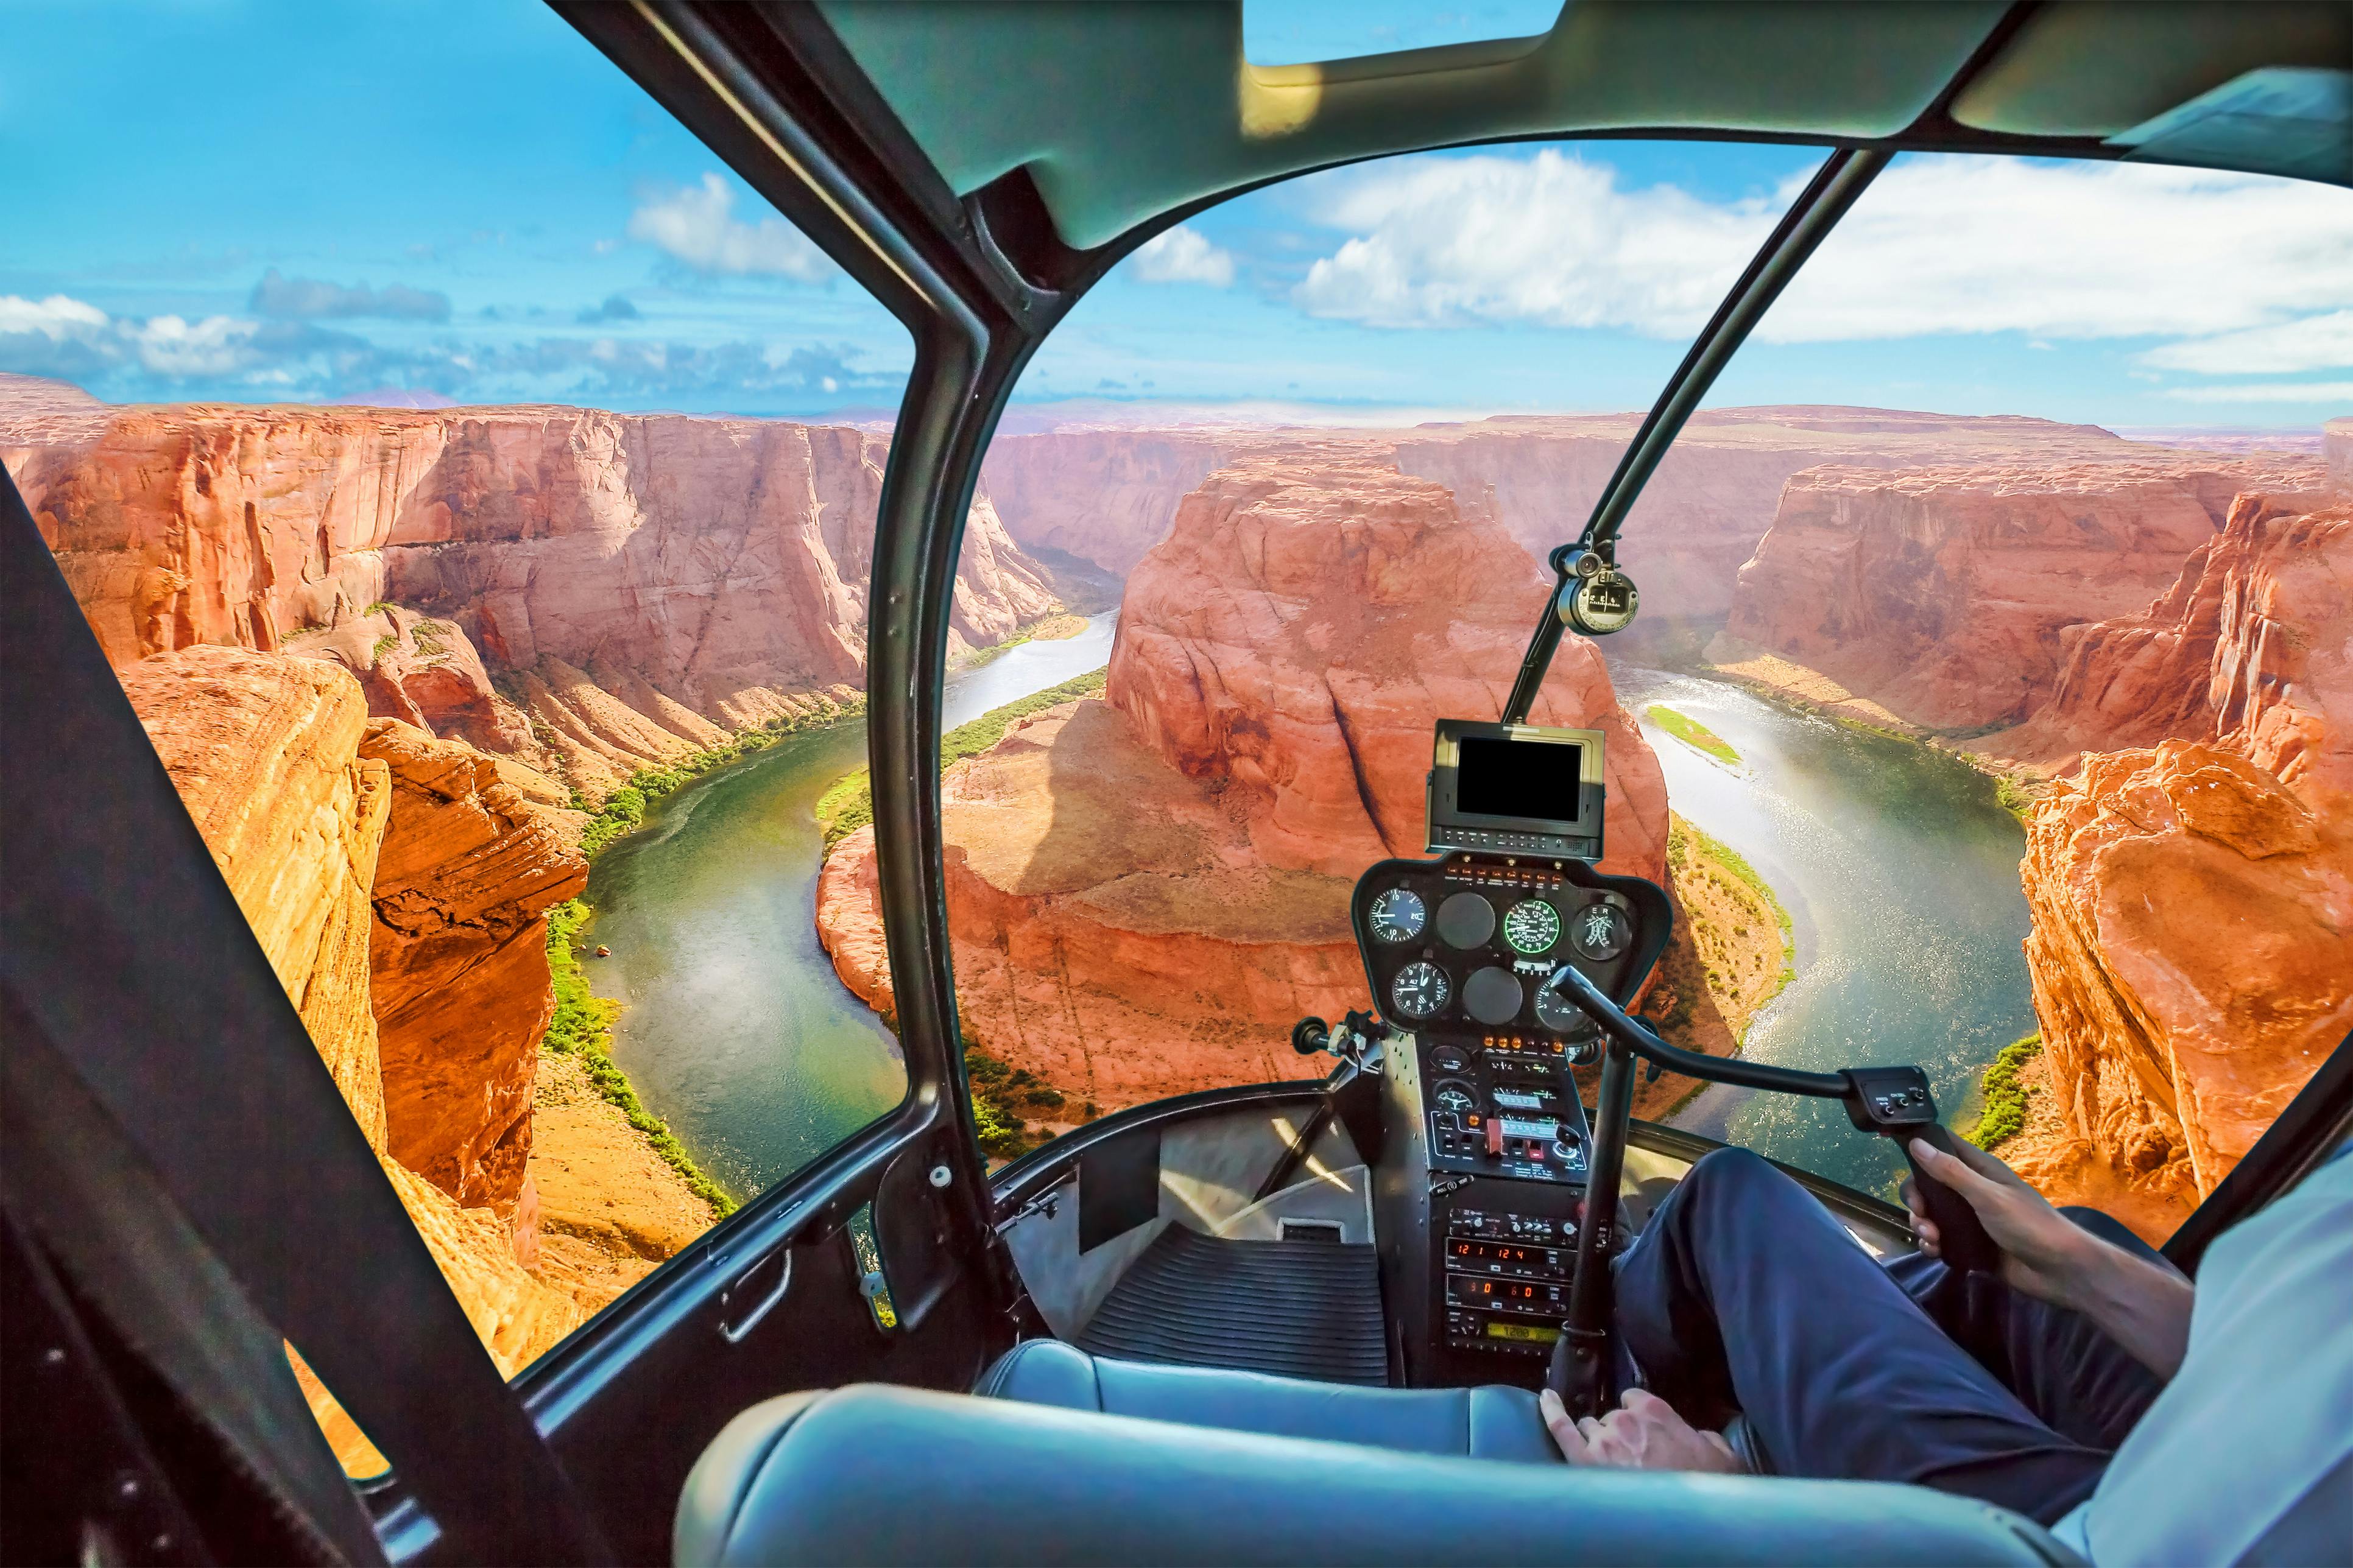 Helikoptervlucht over de South Rim van de Grand Canyon